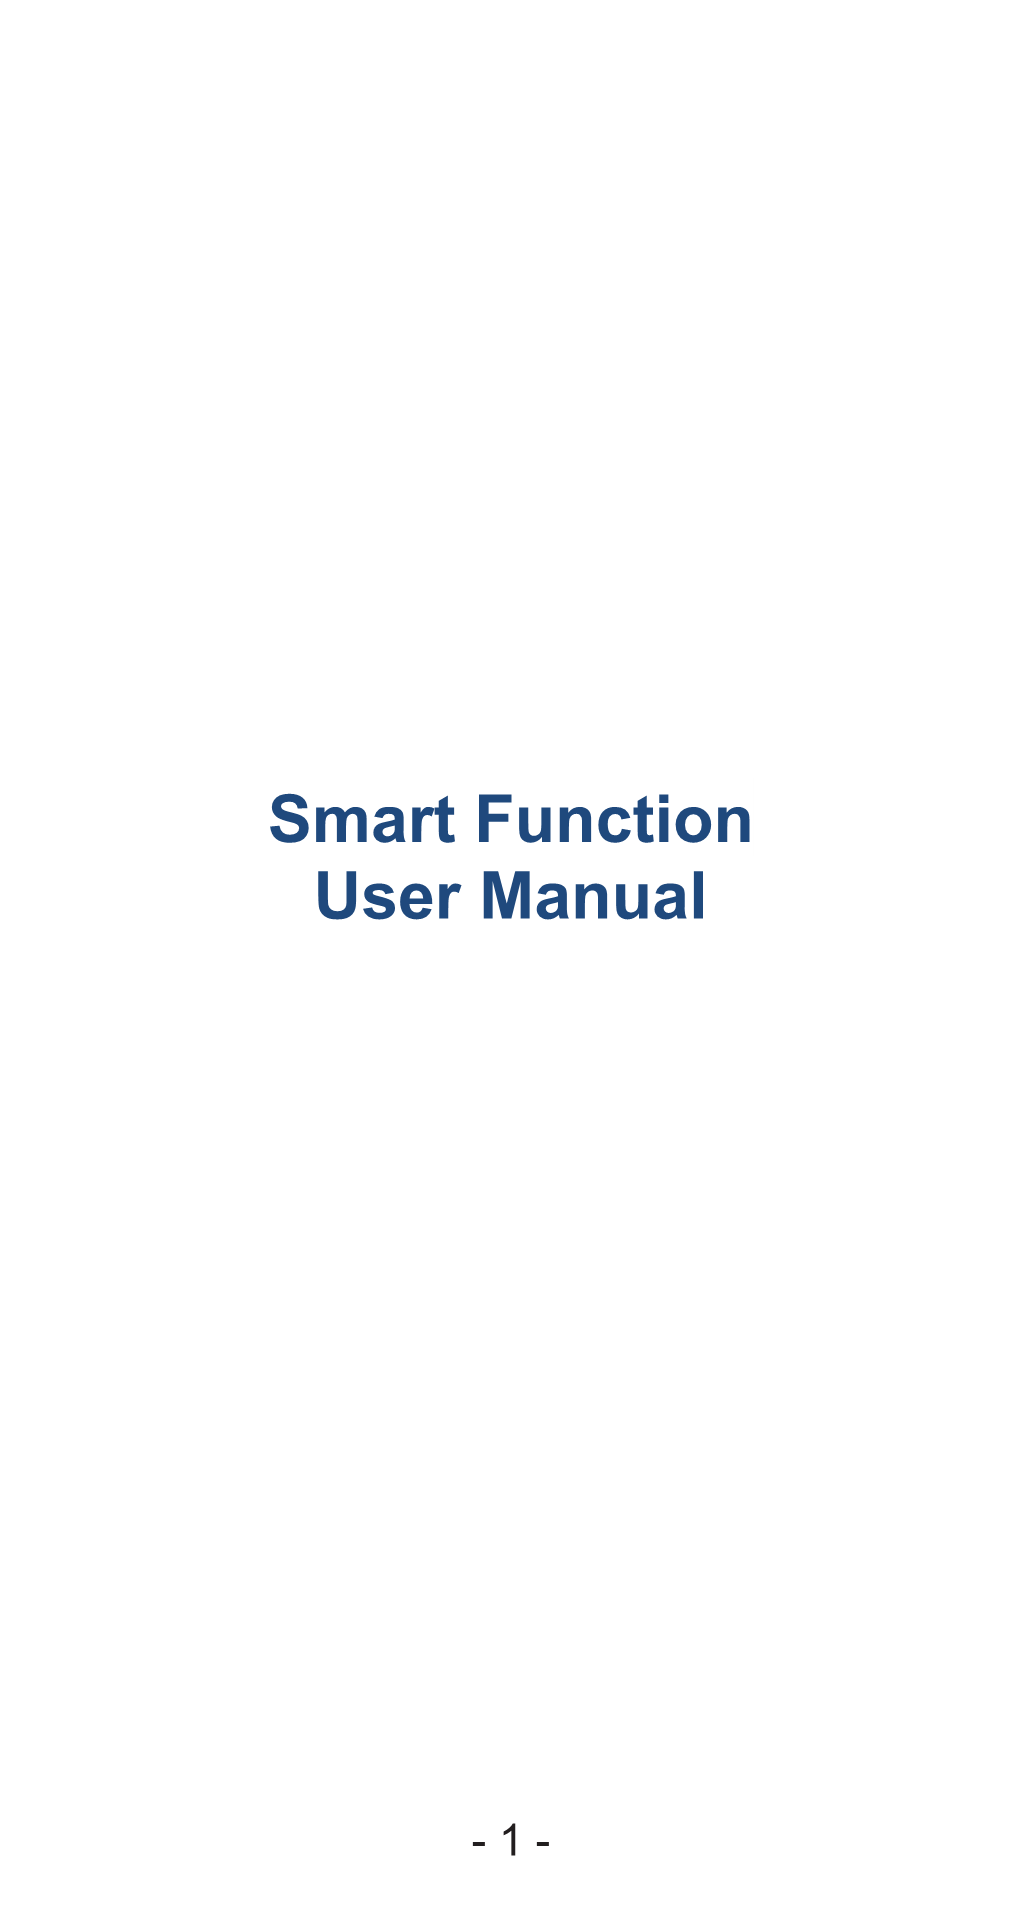 Smart Function User Manual